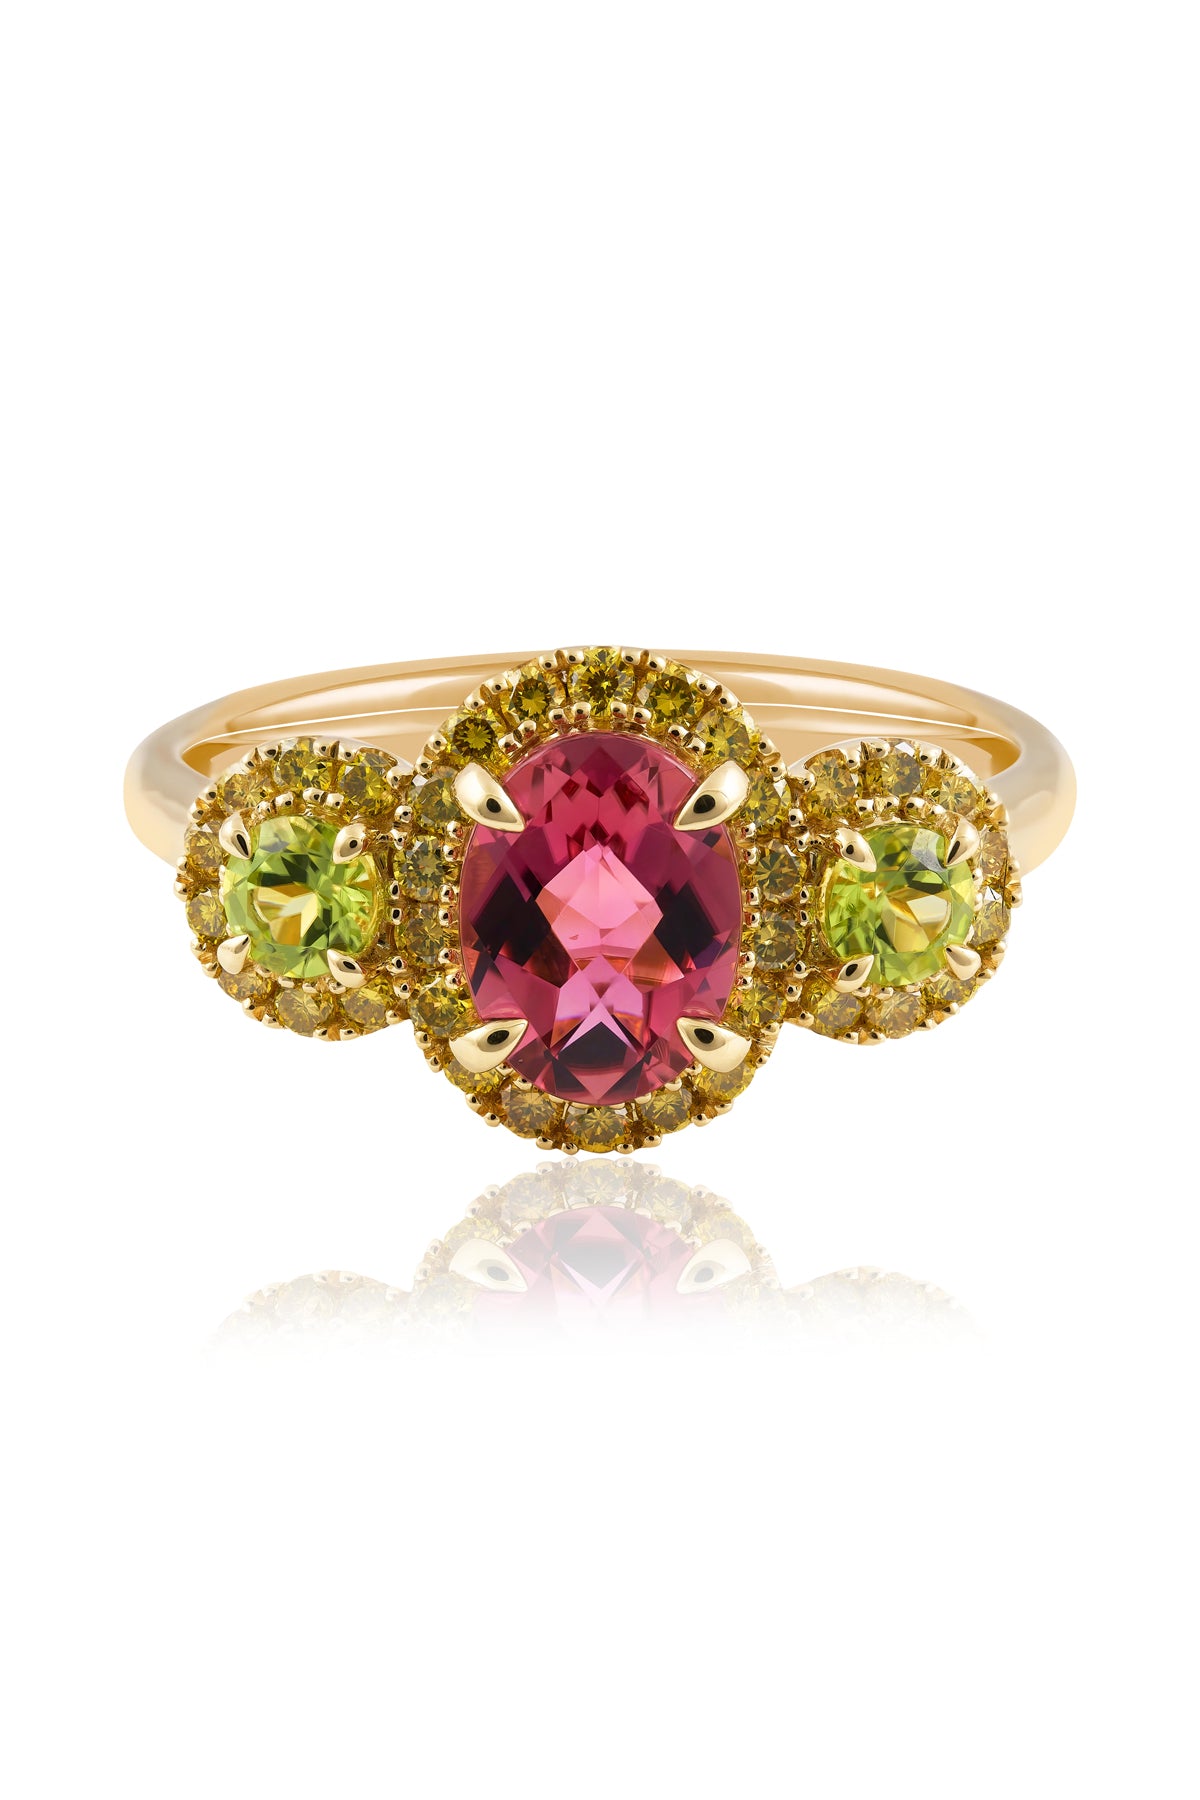 Pink Tourmaline, Peridot & Diamond Ring In Yellow Gold from LeGassick Jewellers.